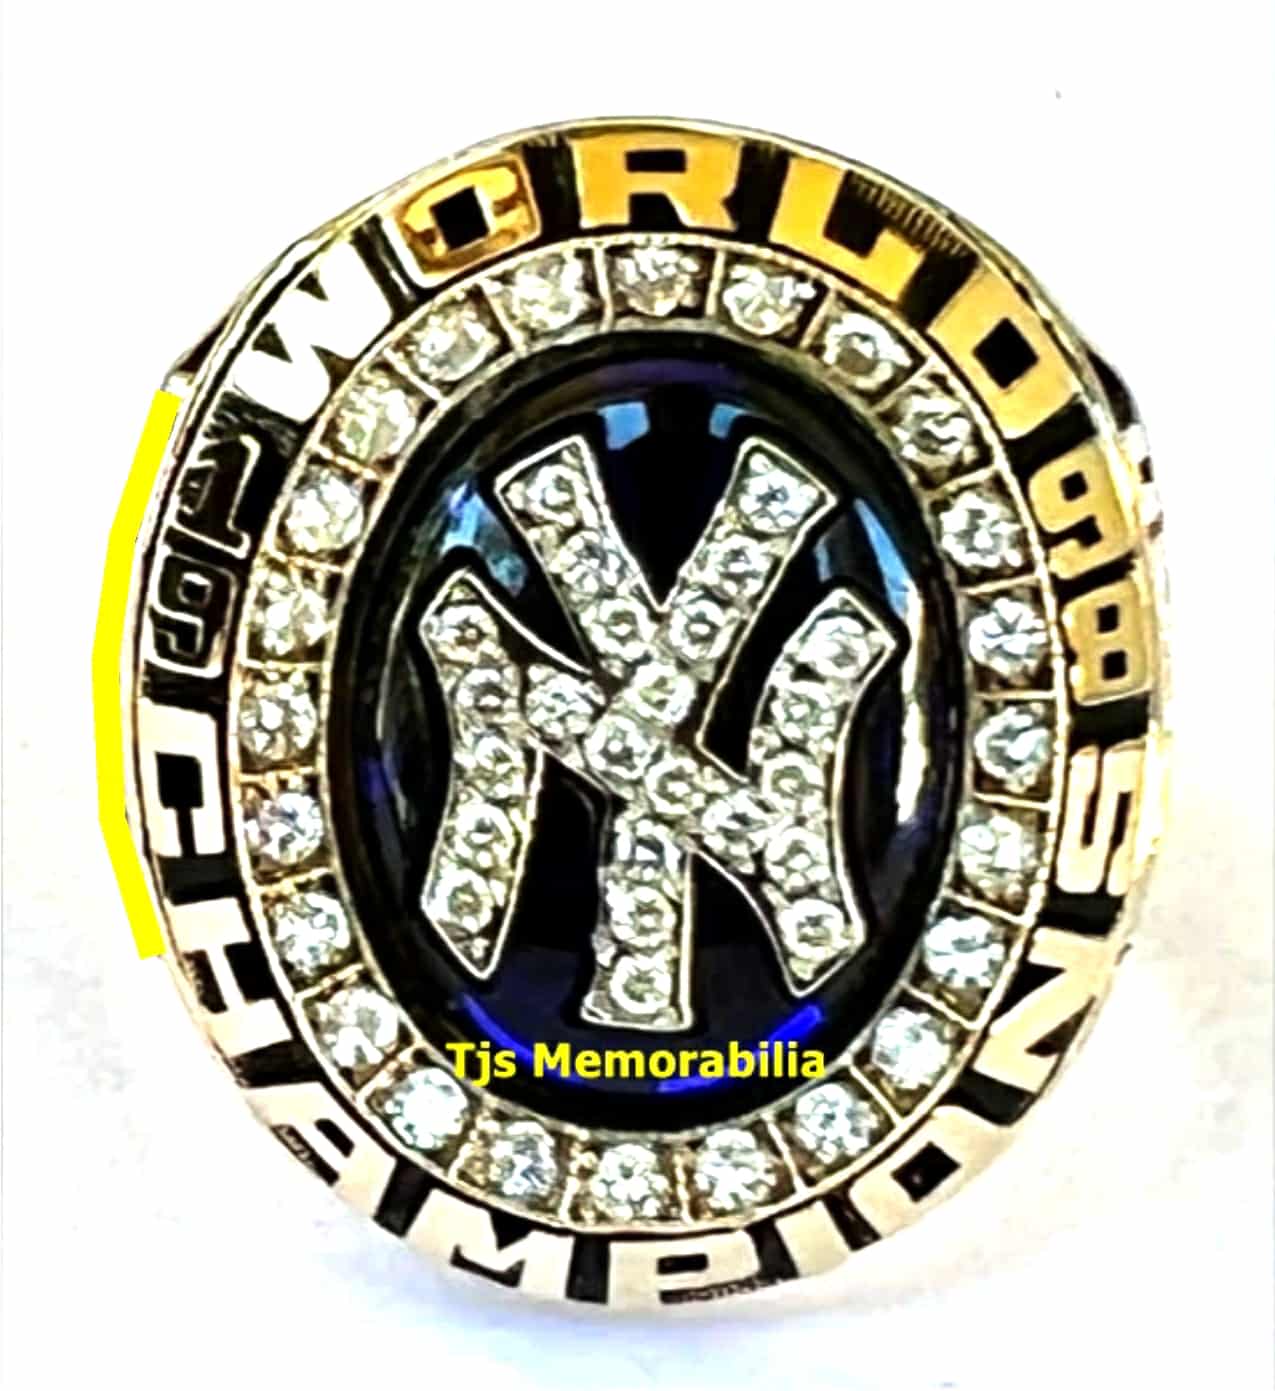 1998 New York Yankees World Champions Healy Plaque